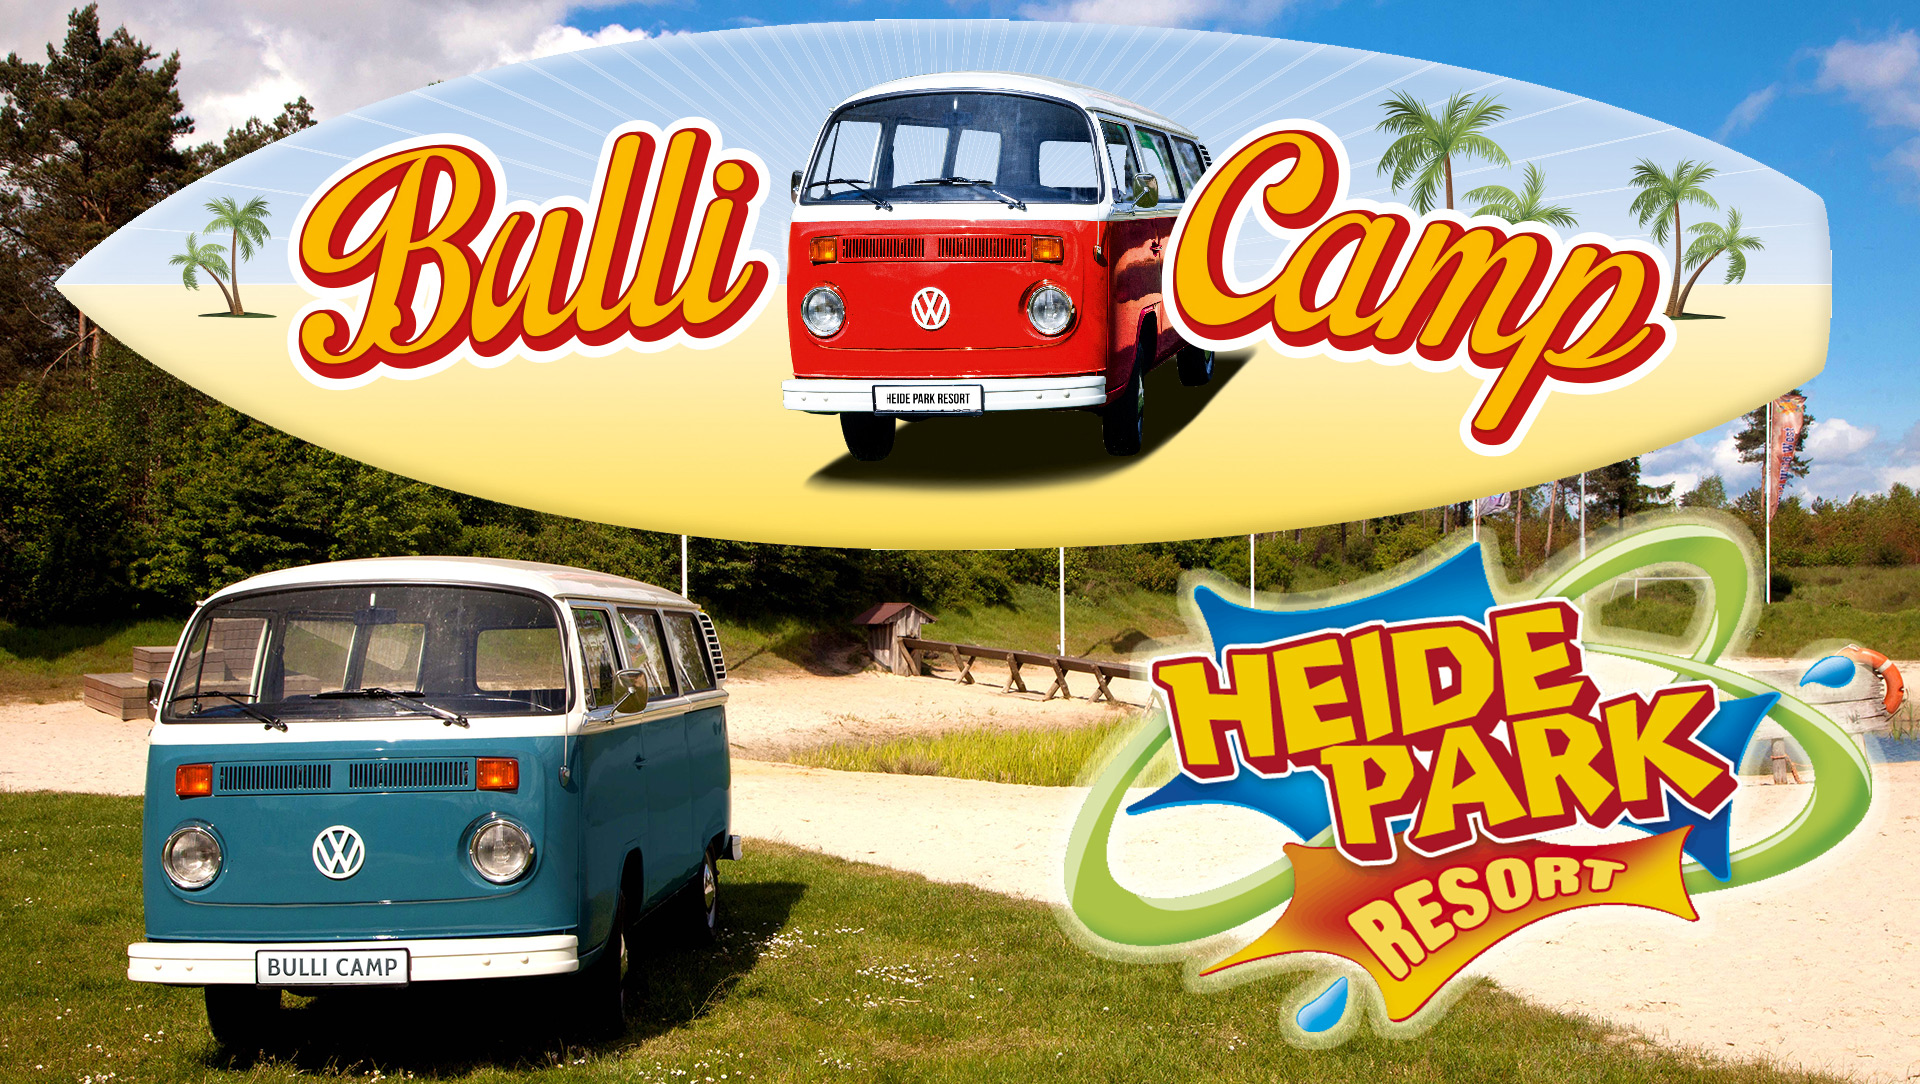 Heide-Park VW Bulli Camp